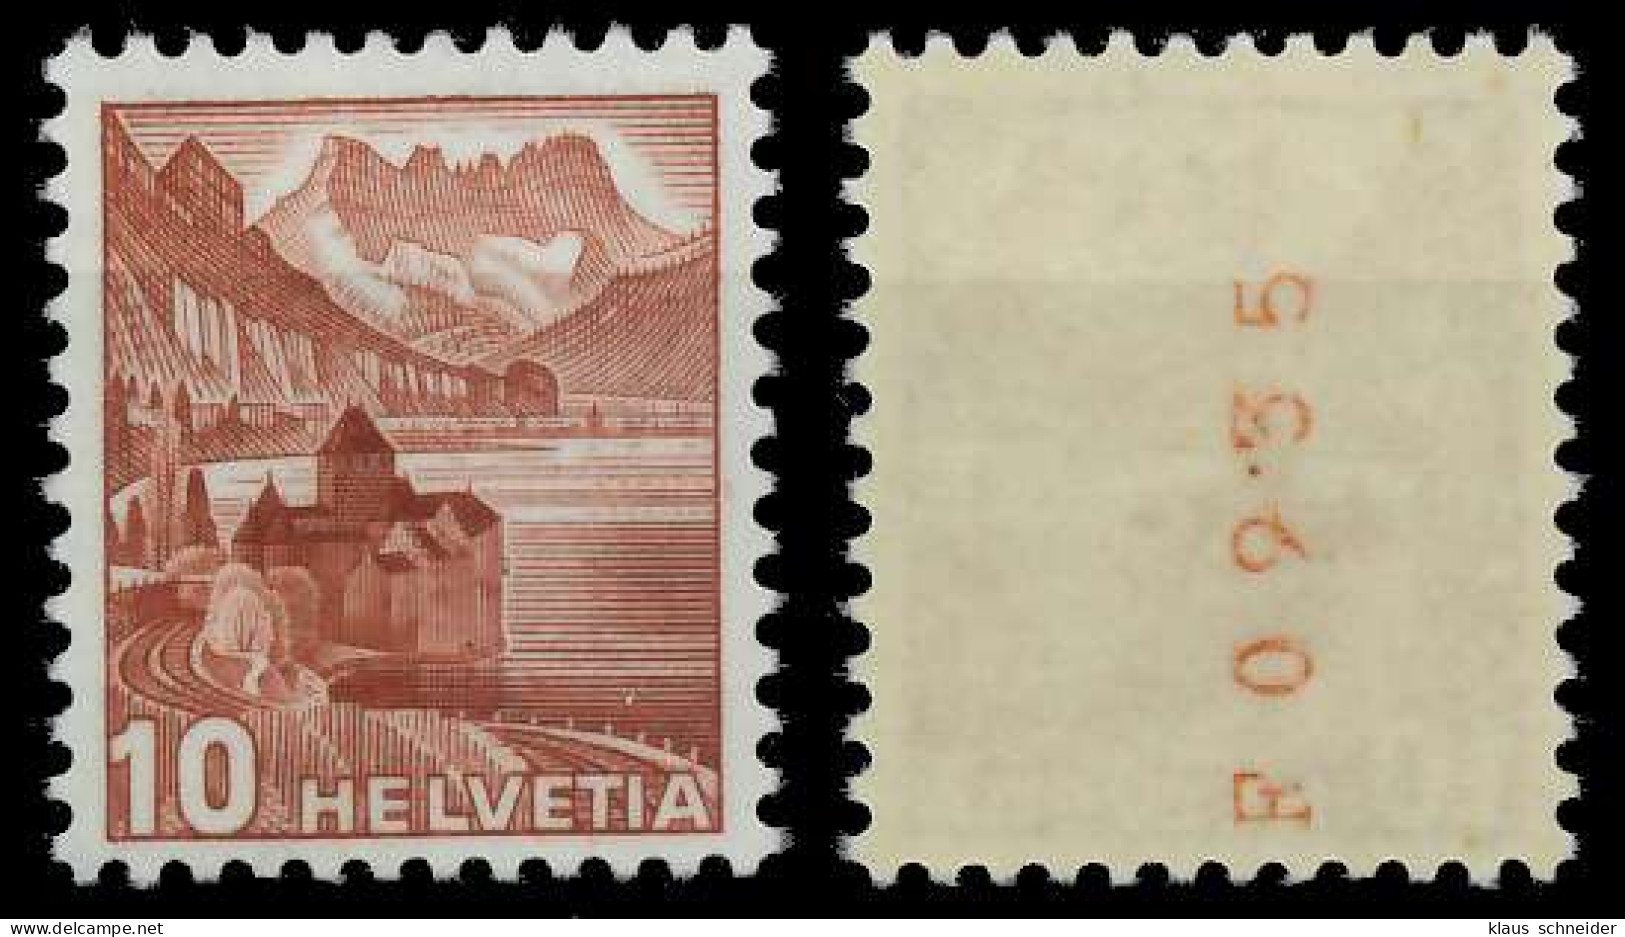 SCHWEIZ ROLLENMARKEN Nr 363bR A-K Postfrisch X6794A2 - Coil Stamps